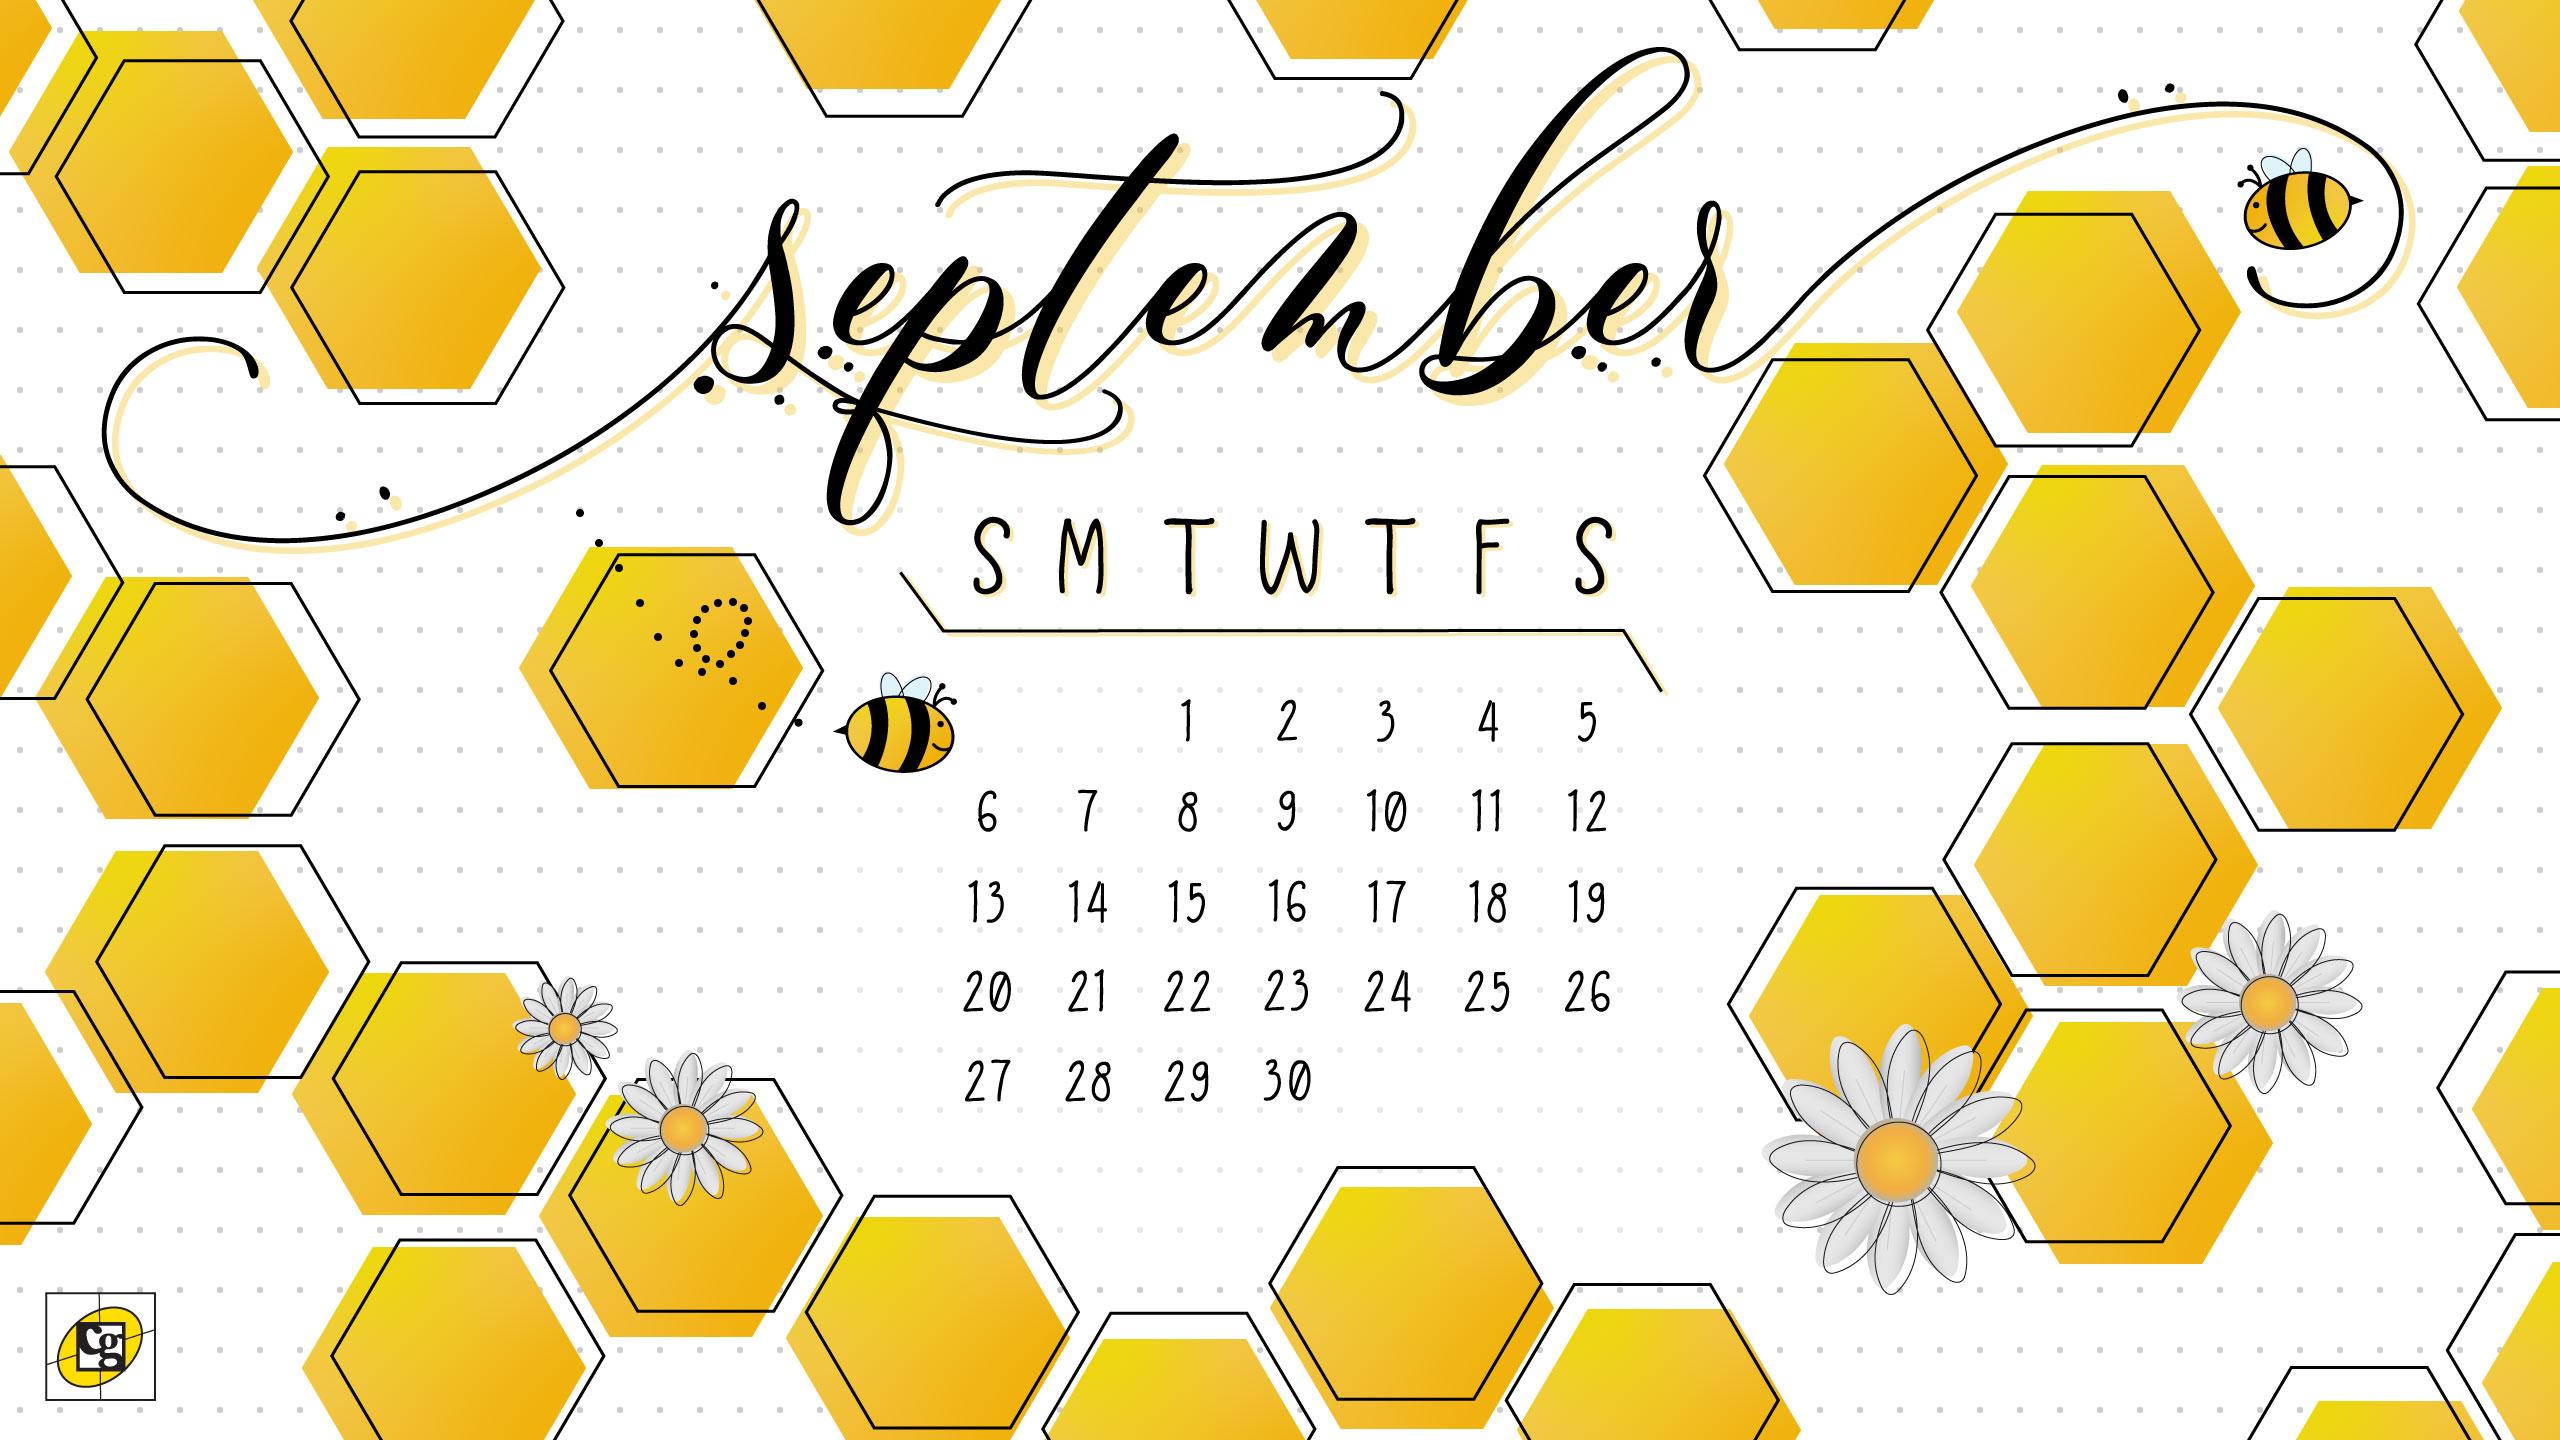 Free download: September 2020 Desktop Calendar & Phone Wallpaper -  Composure Graphics : Composure Graphics